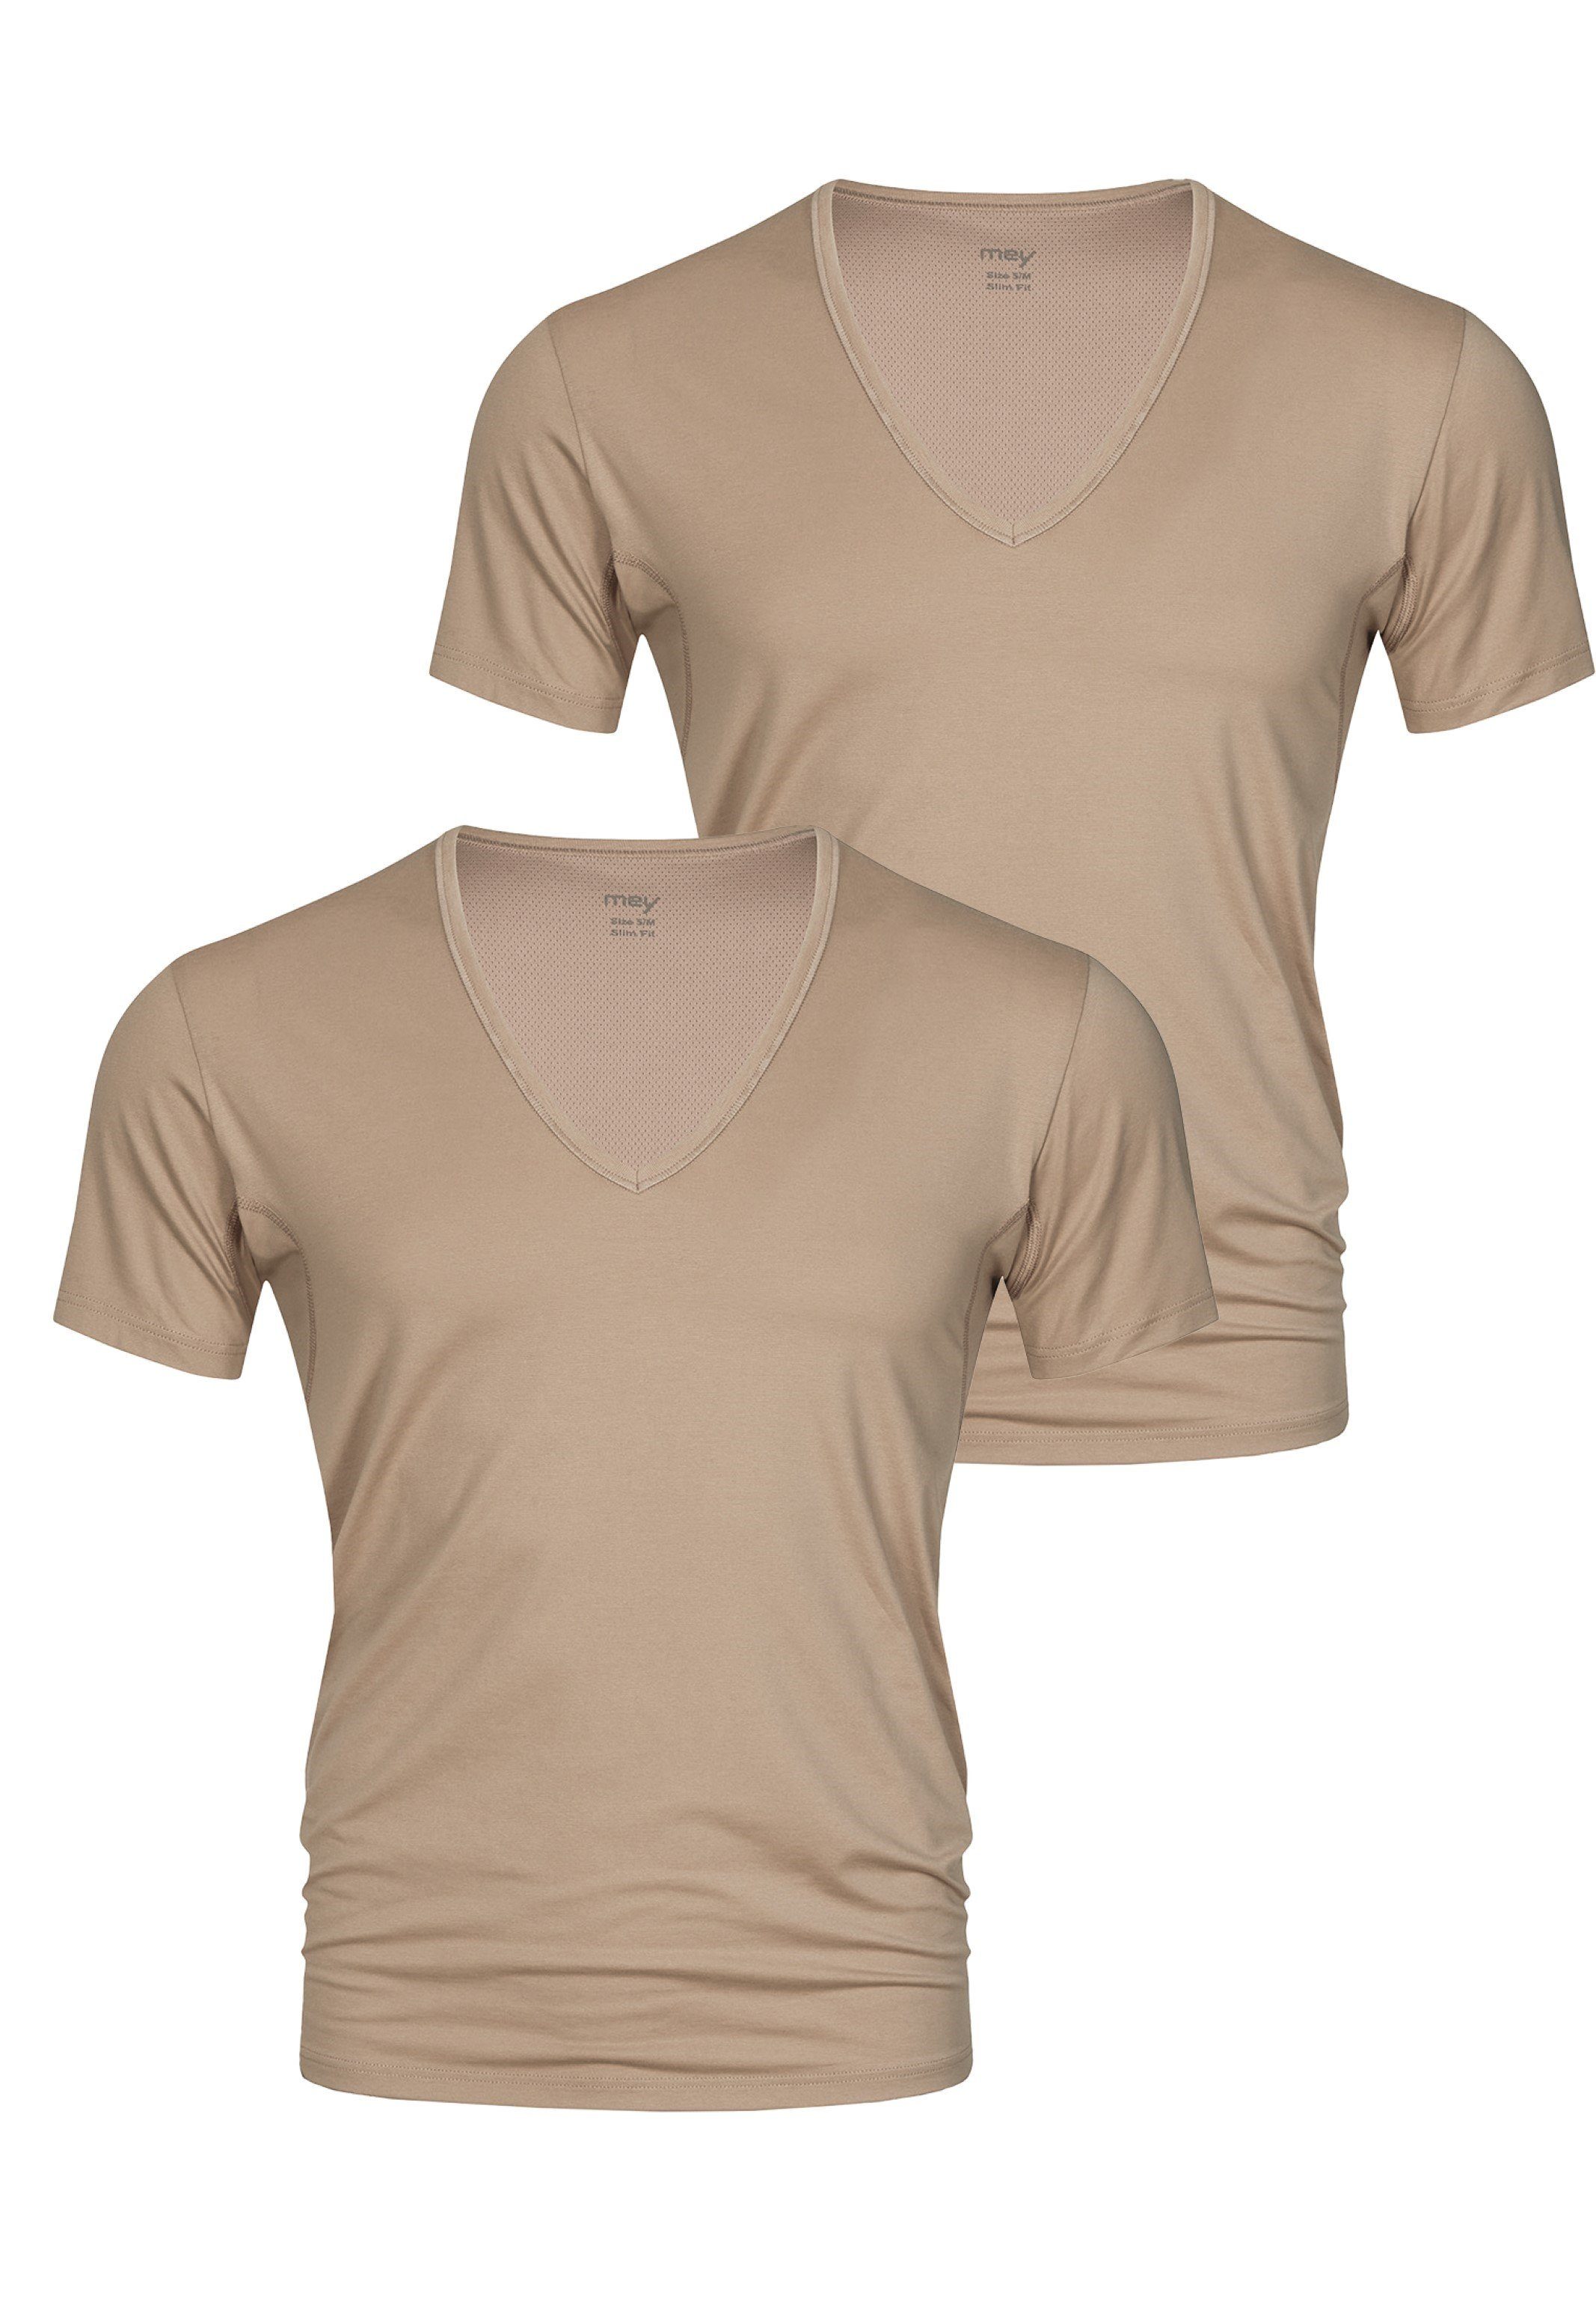 Mey Unterhemd 2er Pack Dry Cotton (Spar-Set, 2-St) Unterhemd / Shirt Kurzarm - Baumwolle - Thermoregulierend Light-Beige